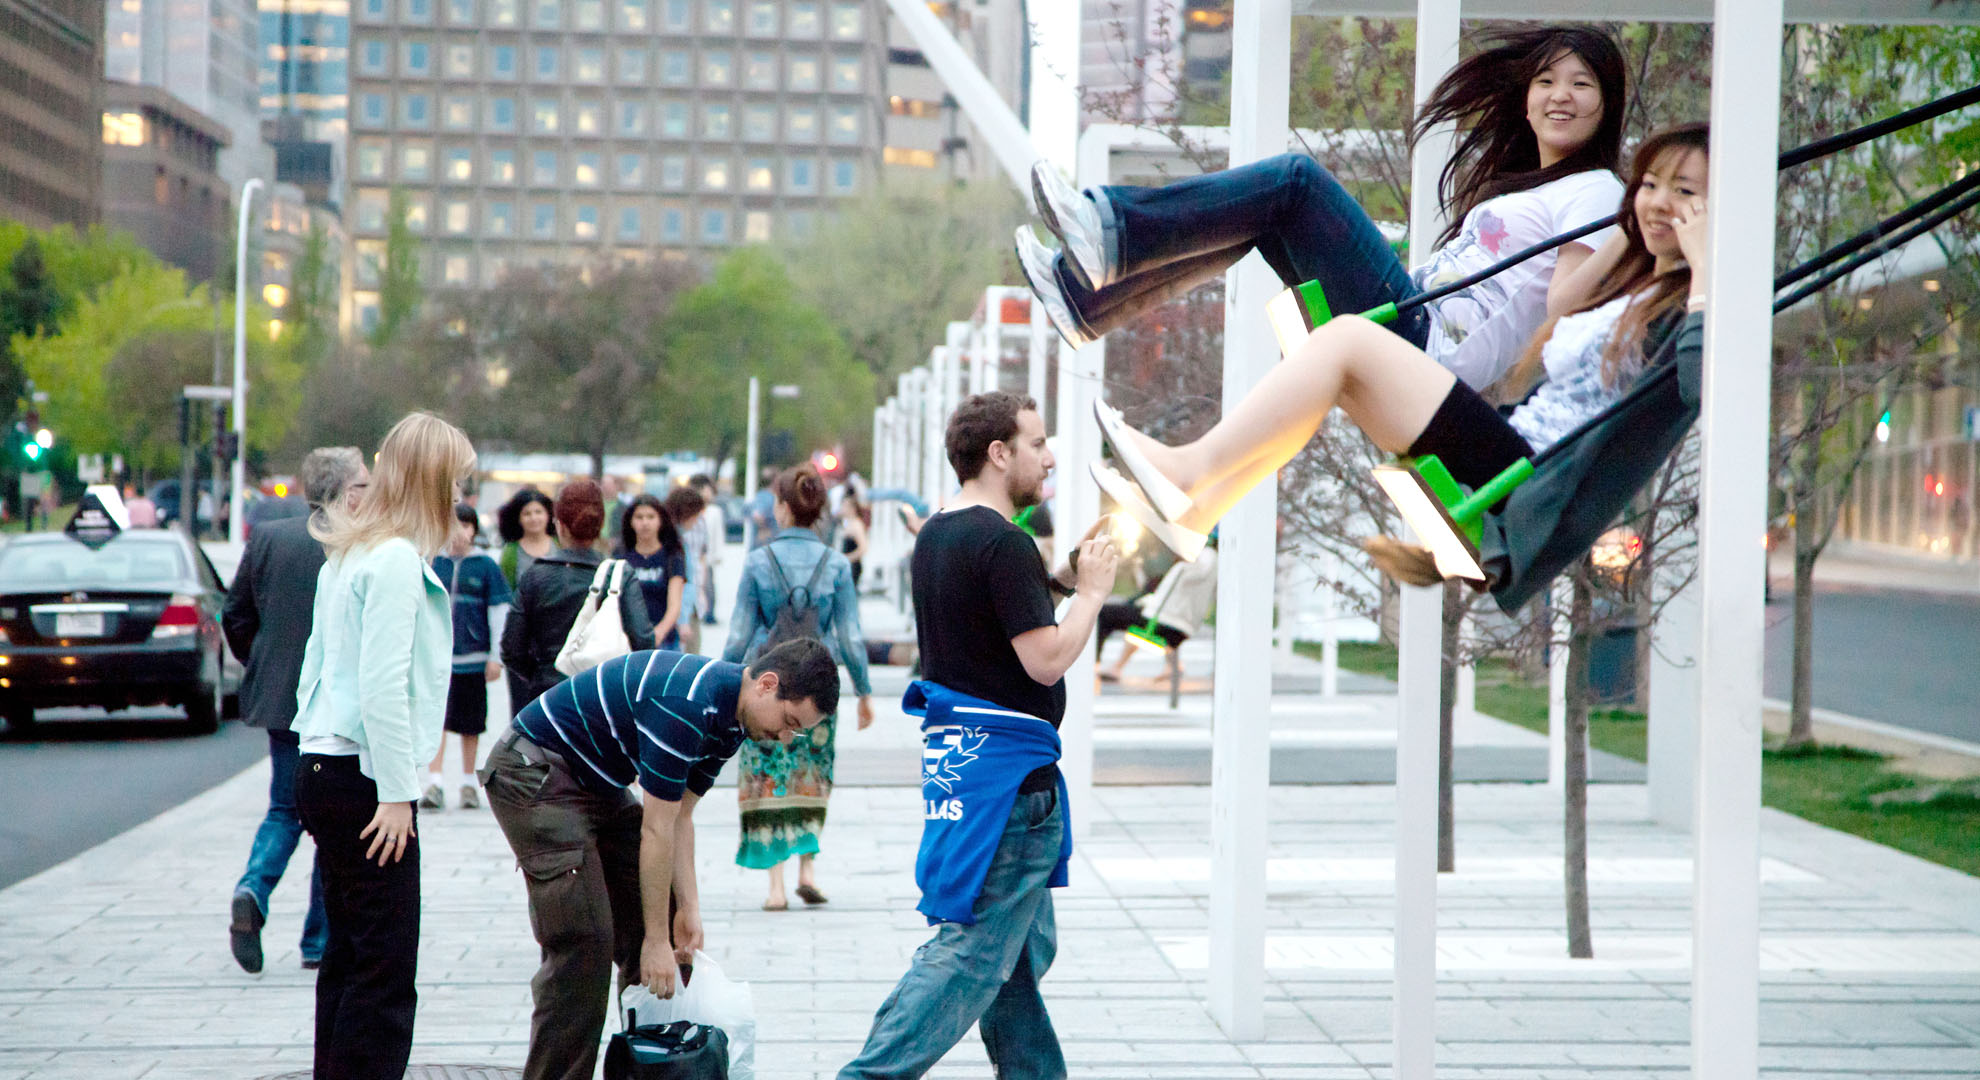 Swings in public space (Montreal).